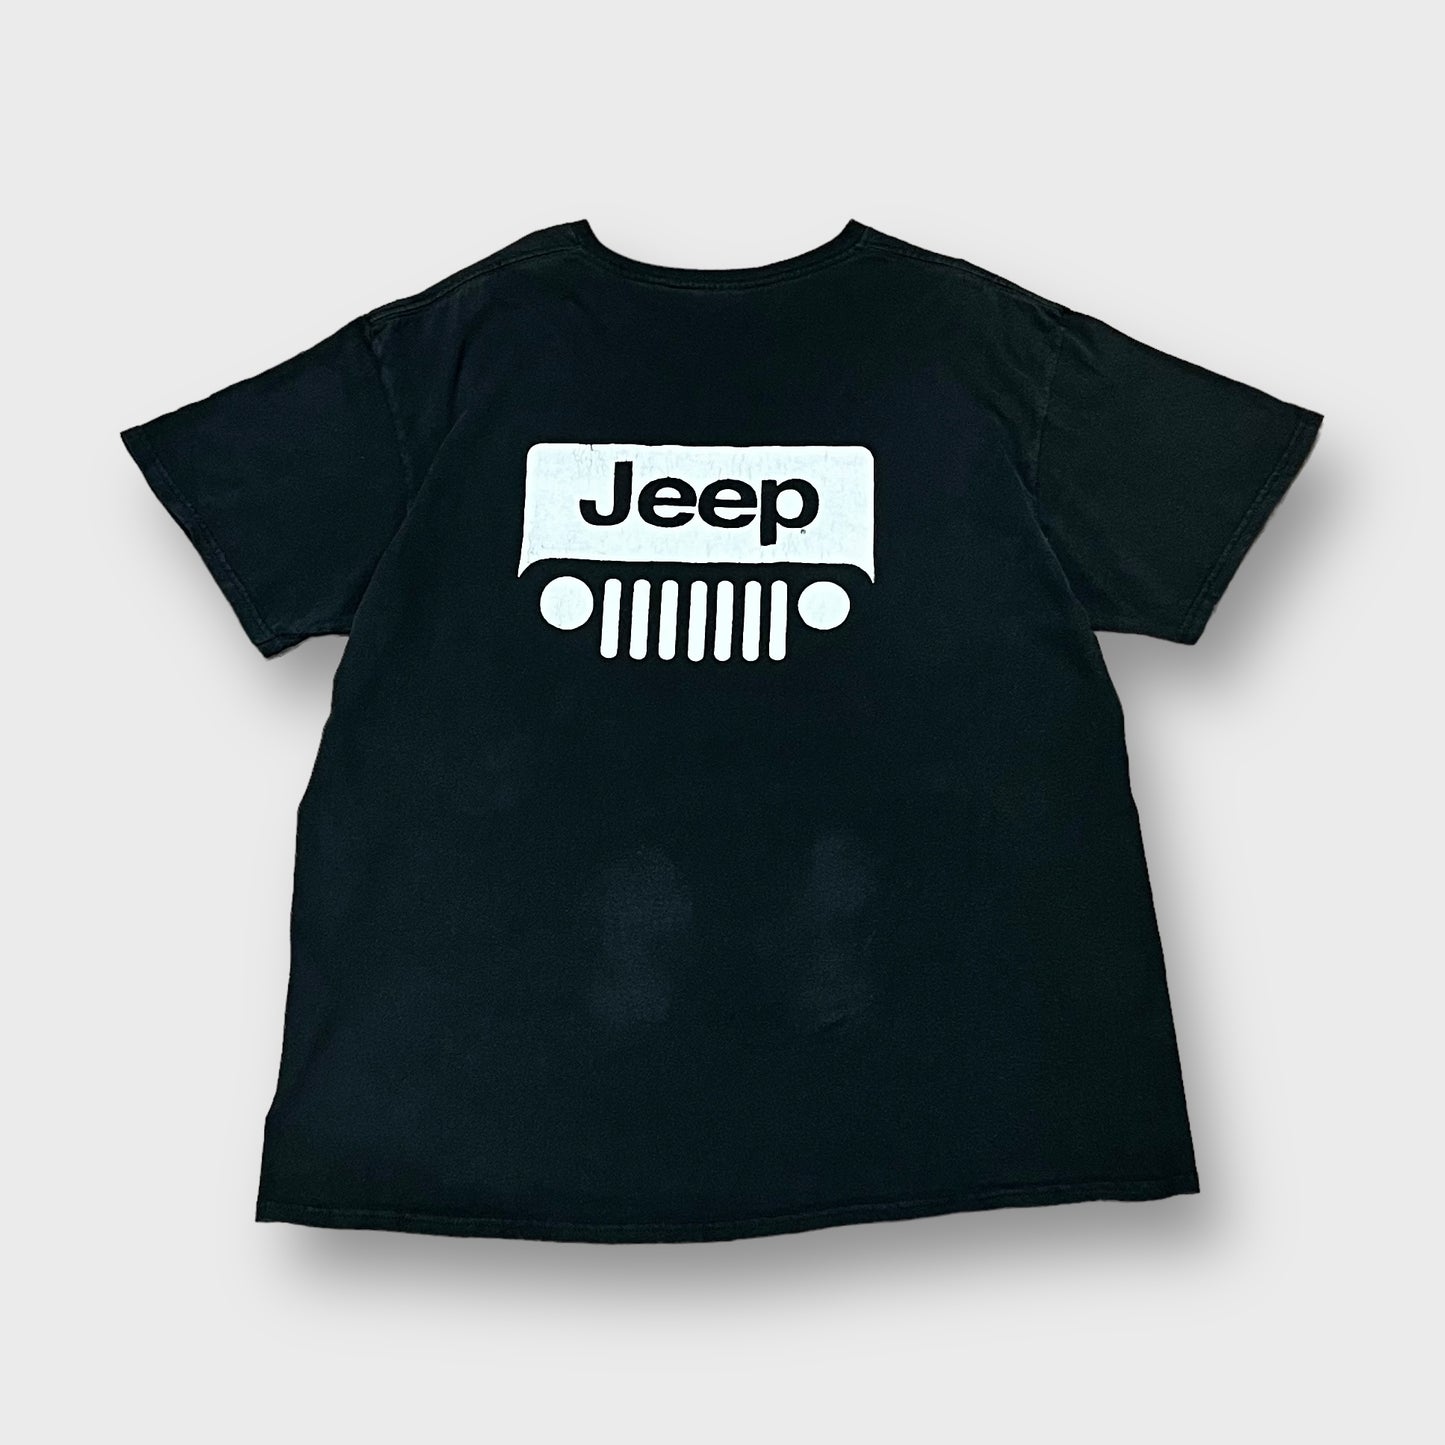 00’s “Jeep” t-shirt